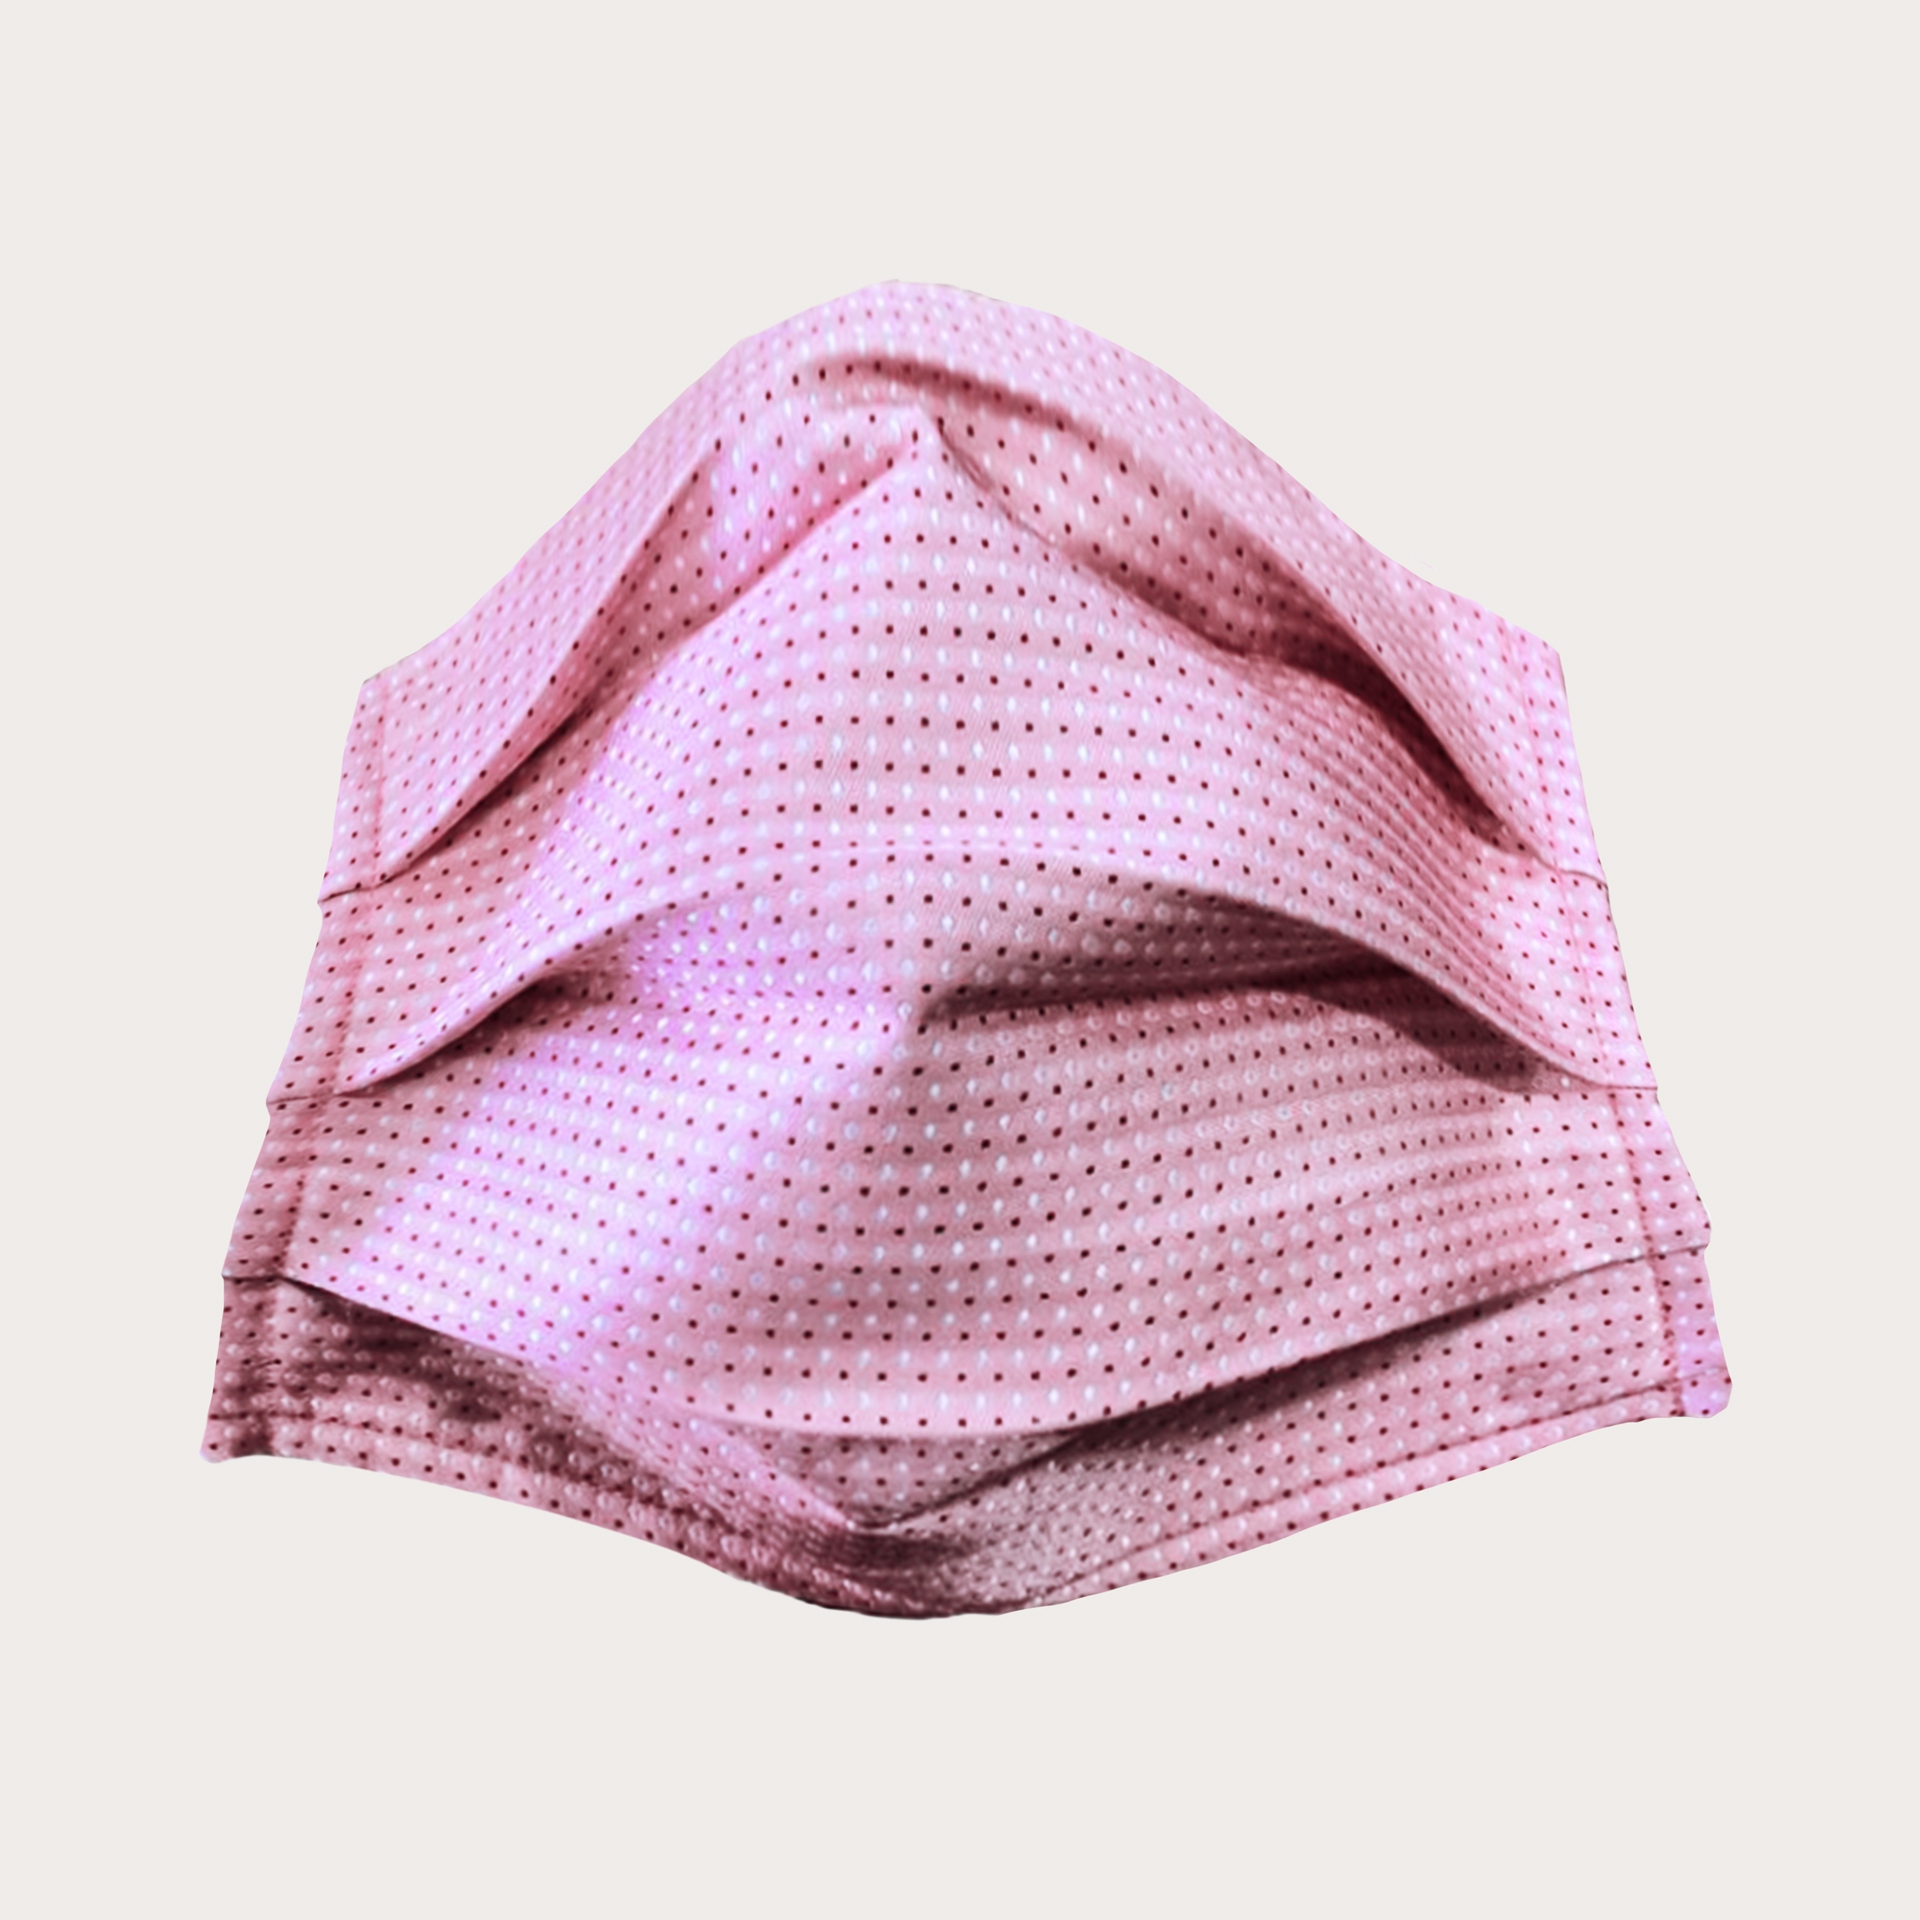 filter masks in pink polka dot fabric